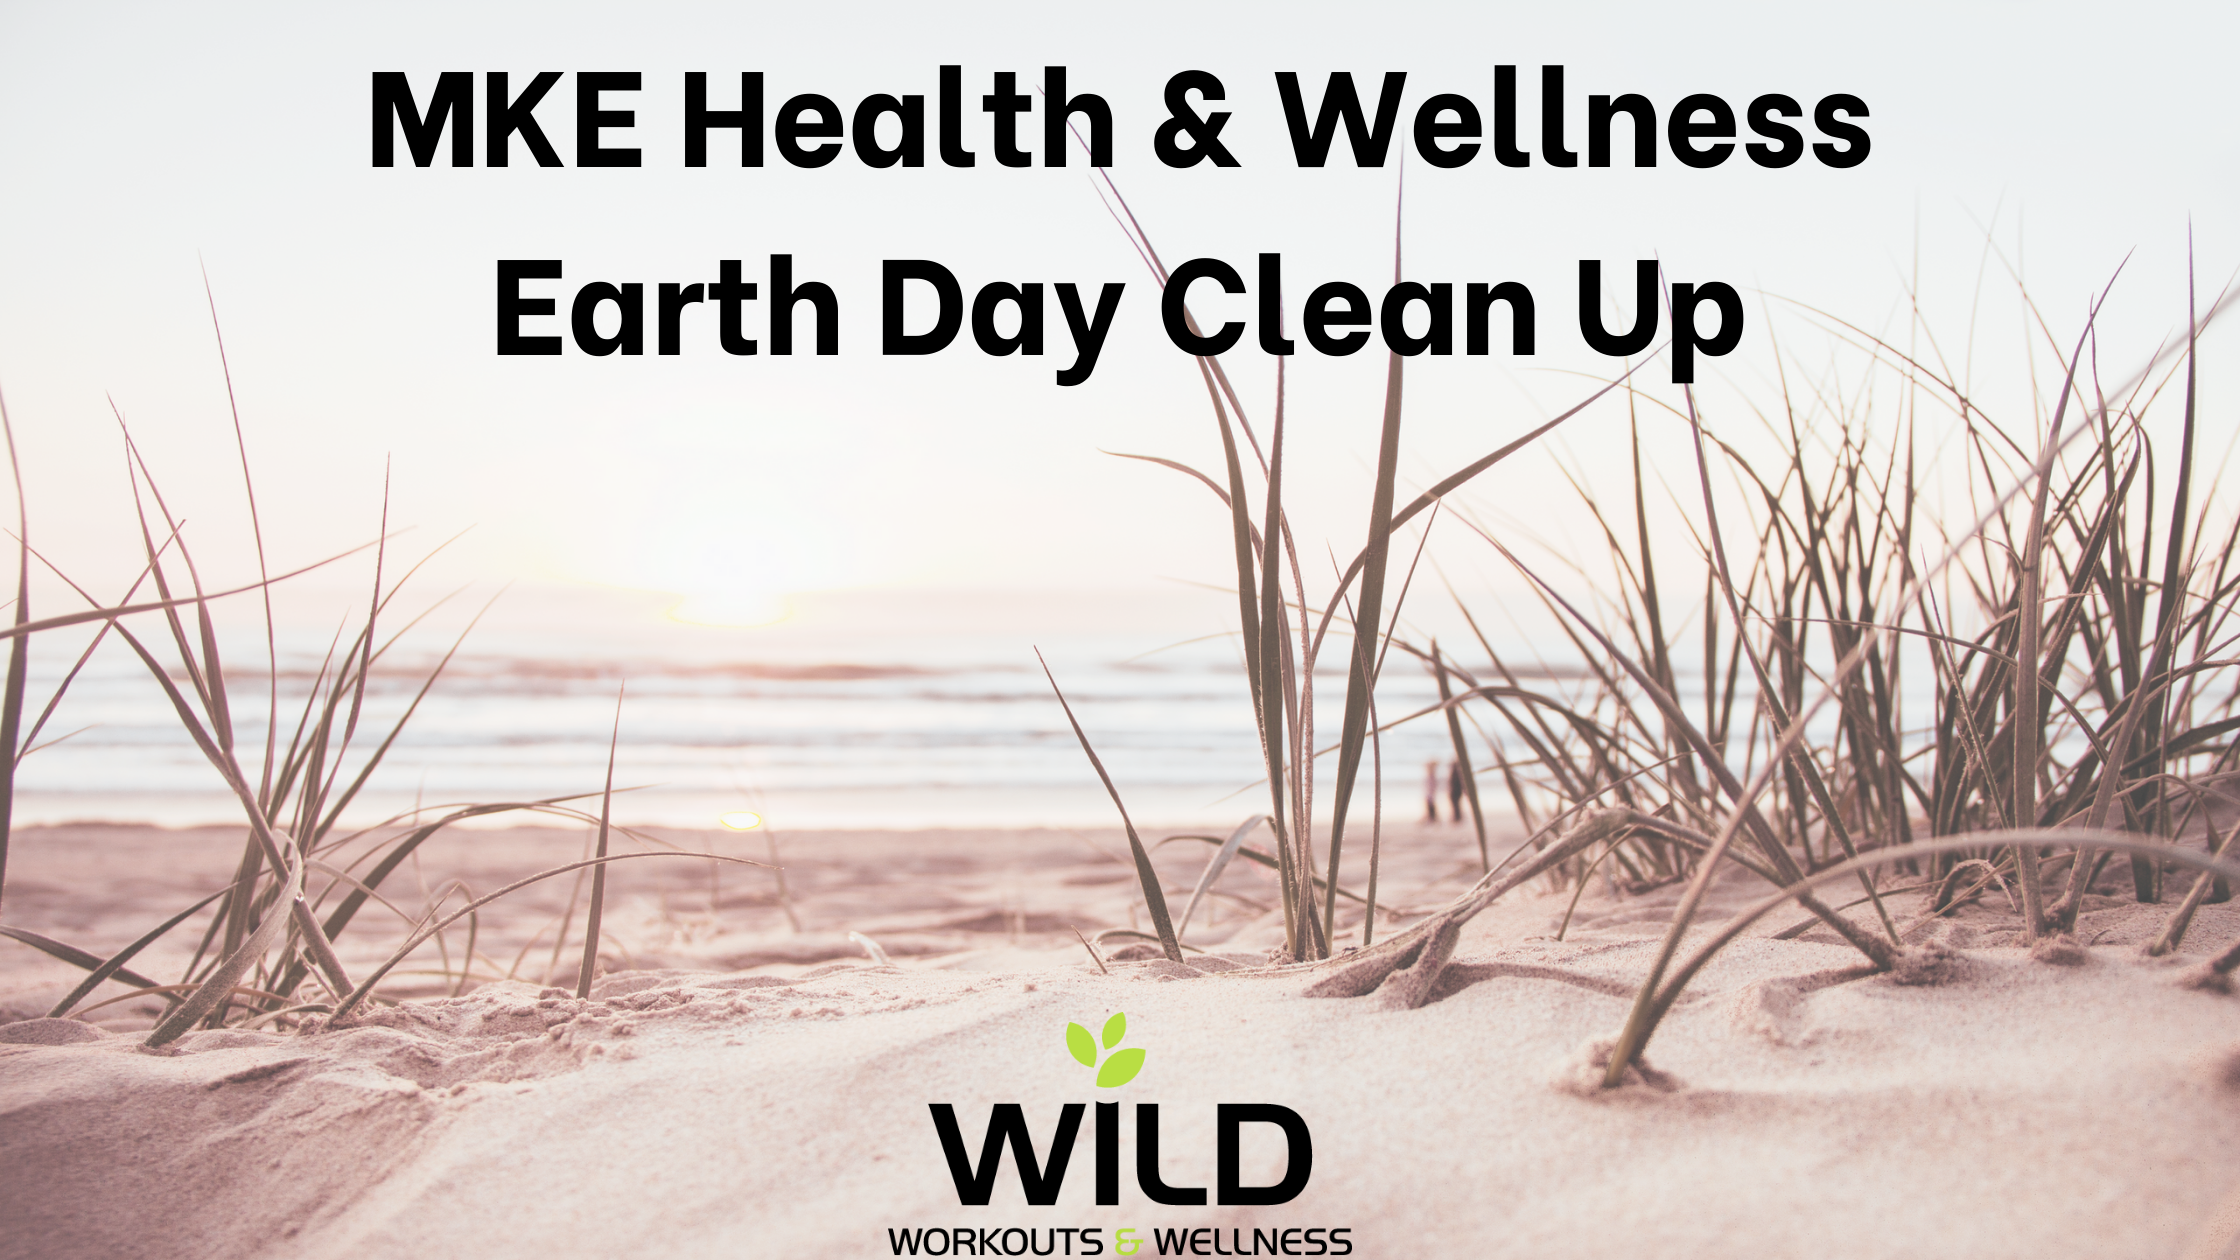 MKE Health & Wellness Earth Day Clean Up